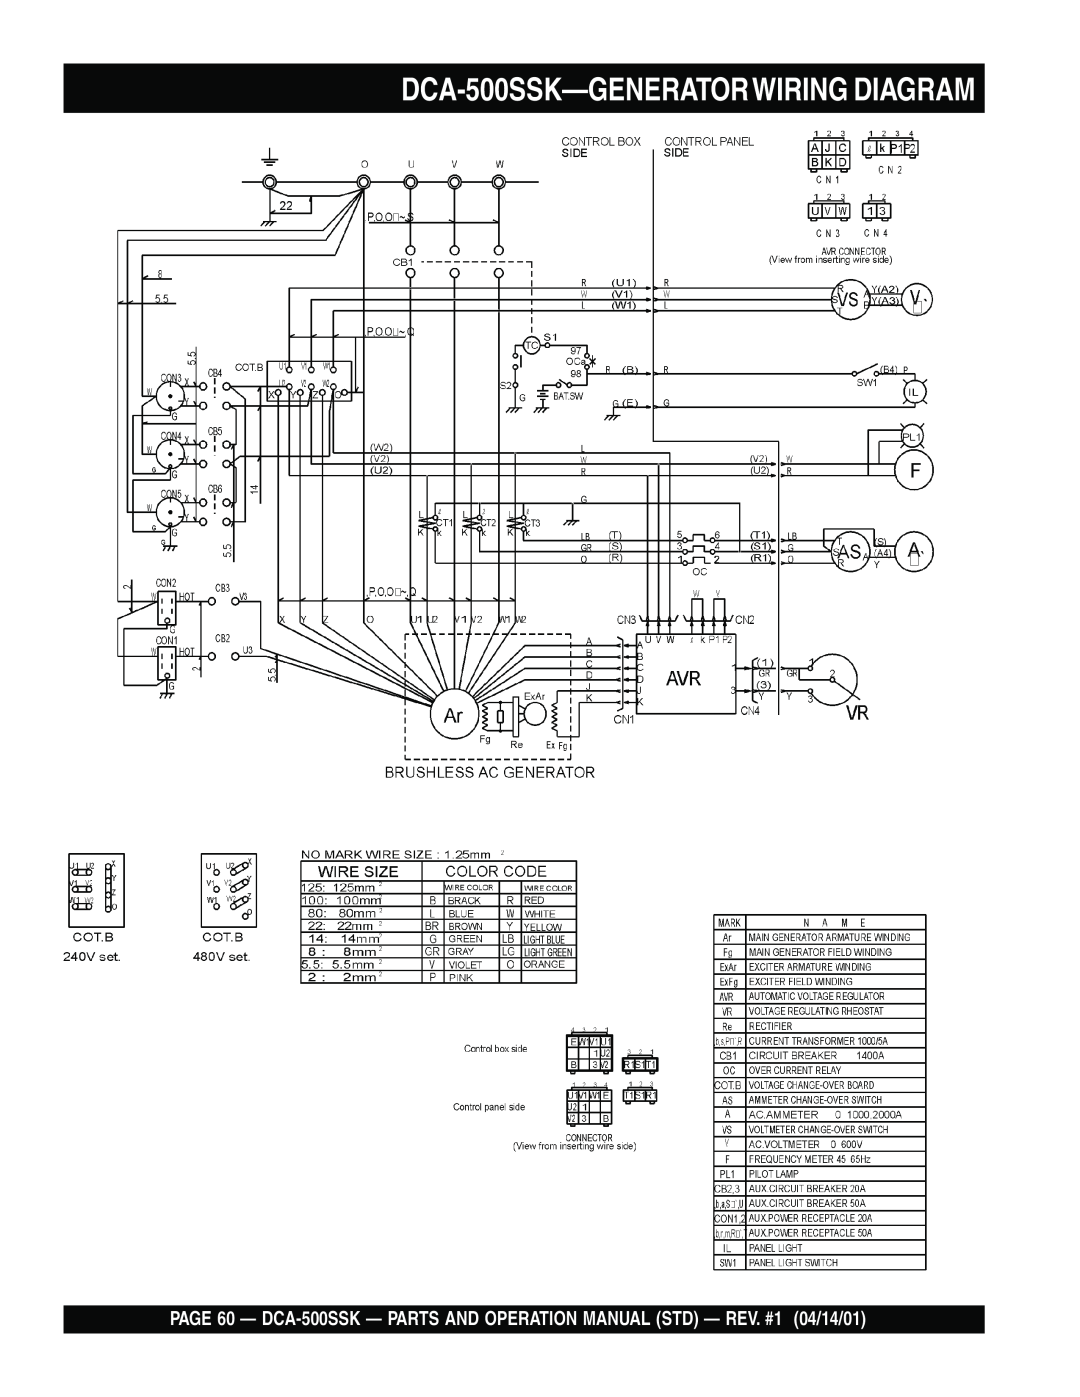 Multiquip operation manual DCA-500SSK-GENERATORWIRING DIAGRAM 